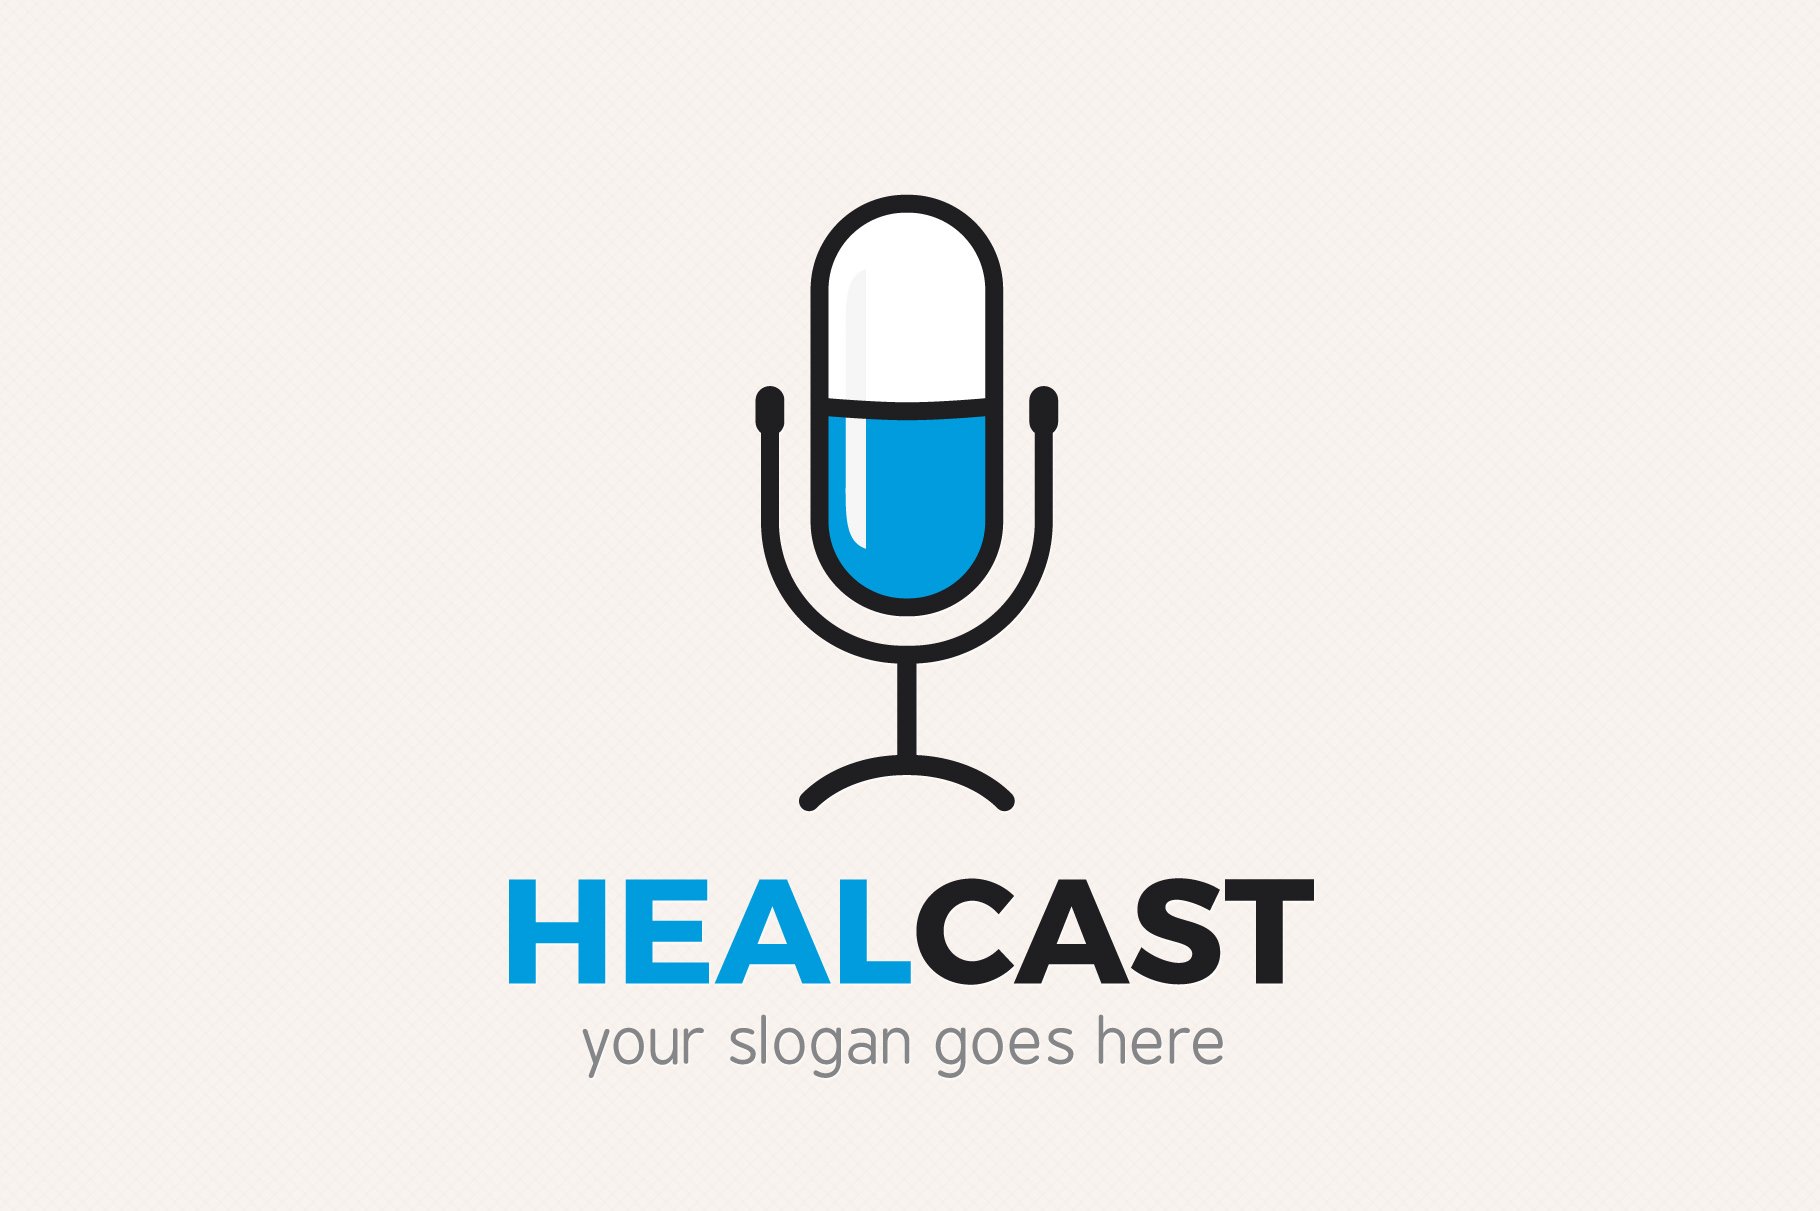 Health Podcast Logo cover image.